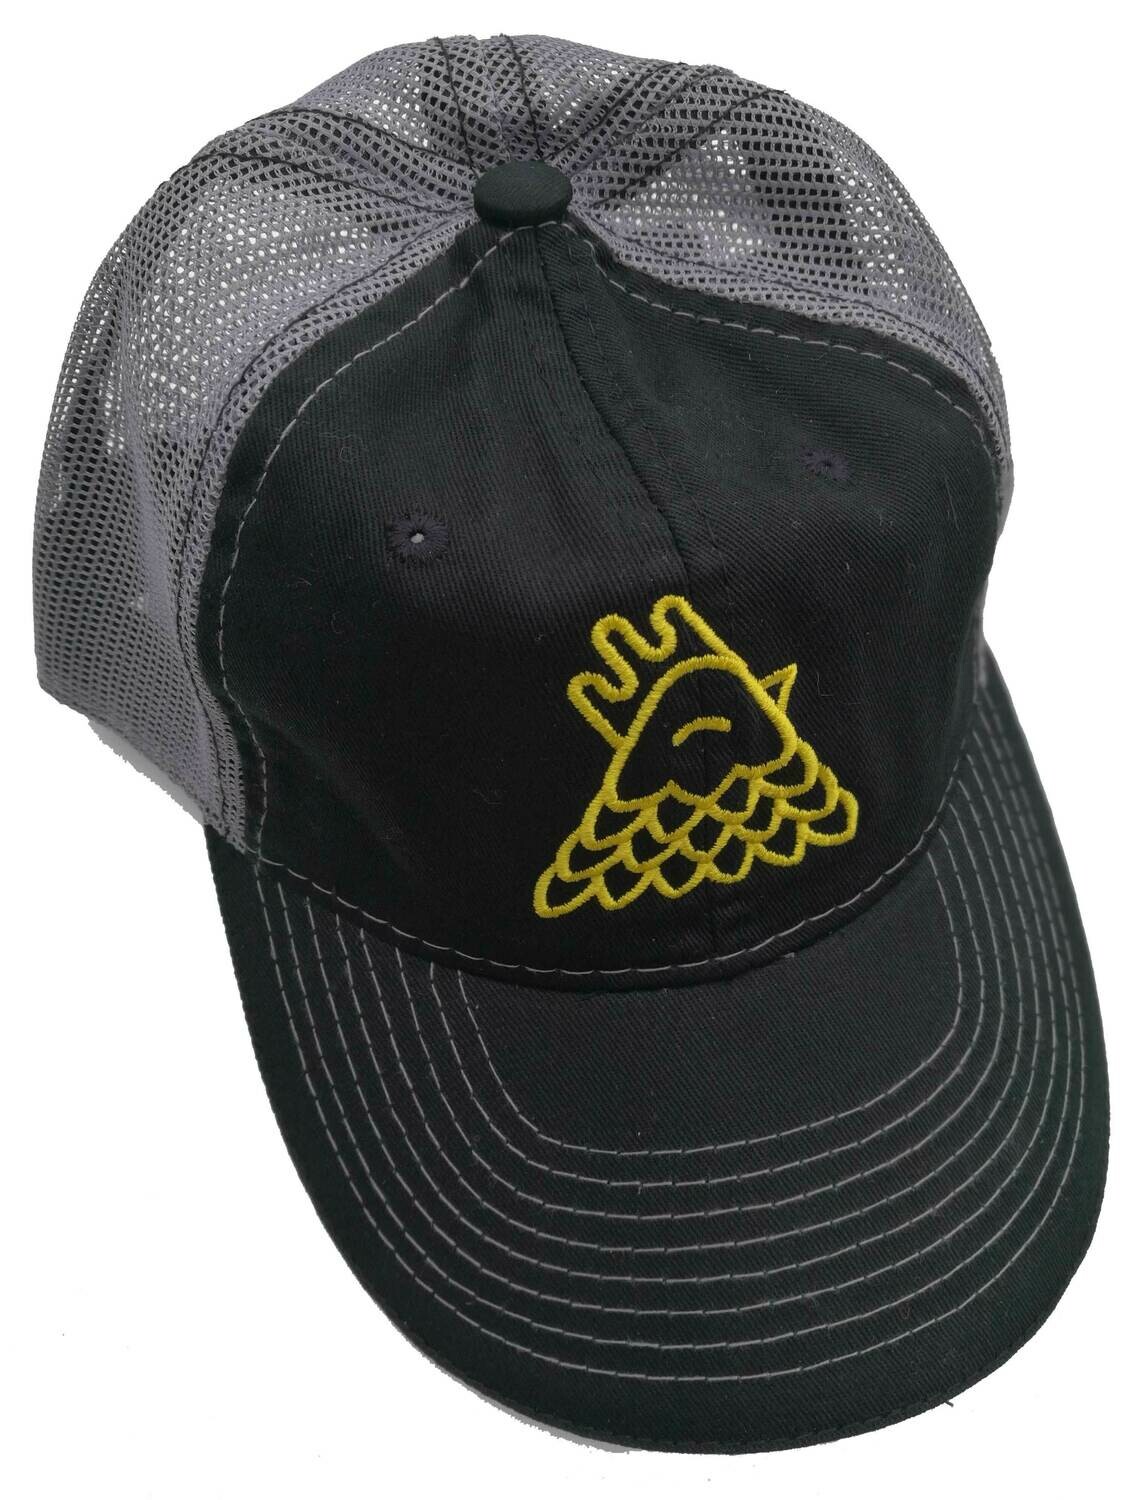 CNR Trucker Hat